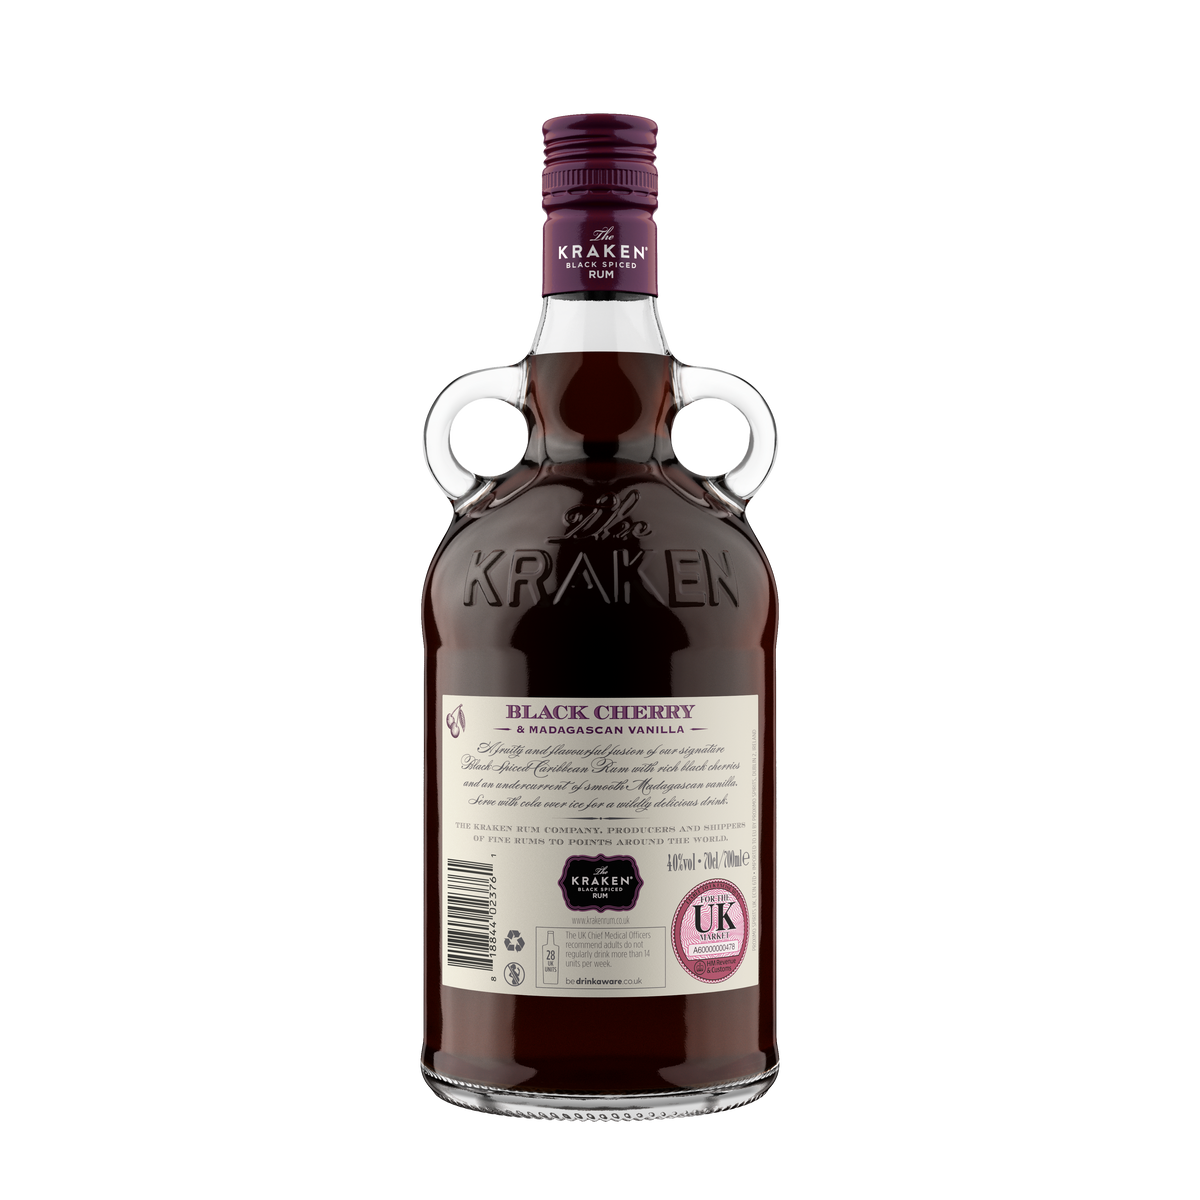 The Kraken Black Black Spiced and – 70cl Spirits Rum of Cherry Madagascan Vanilla House